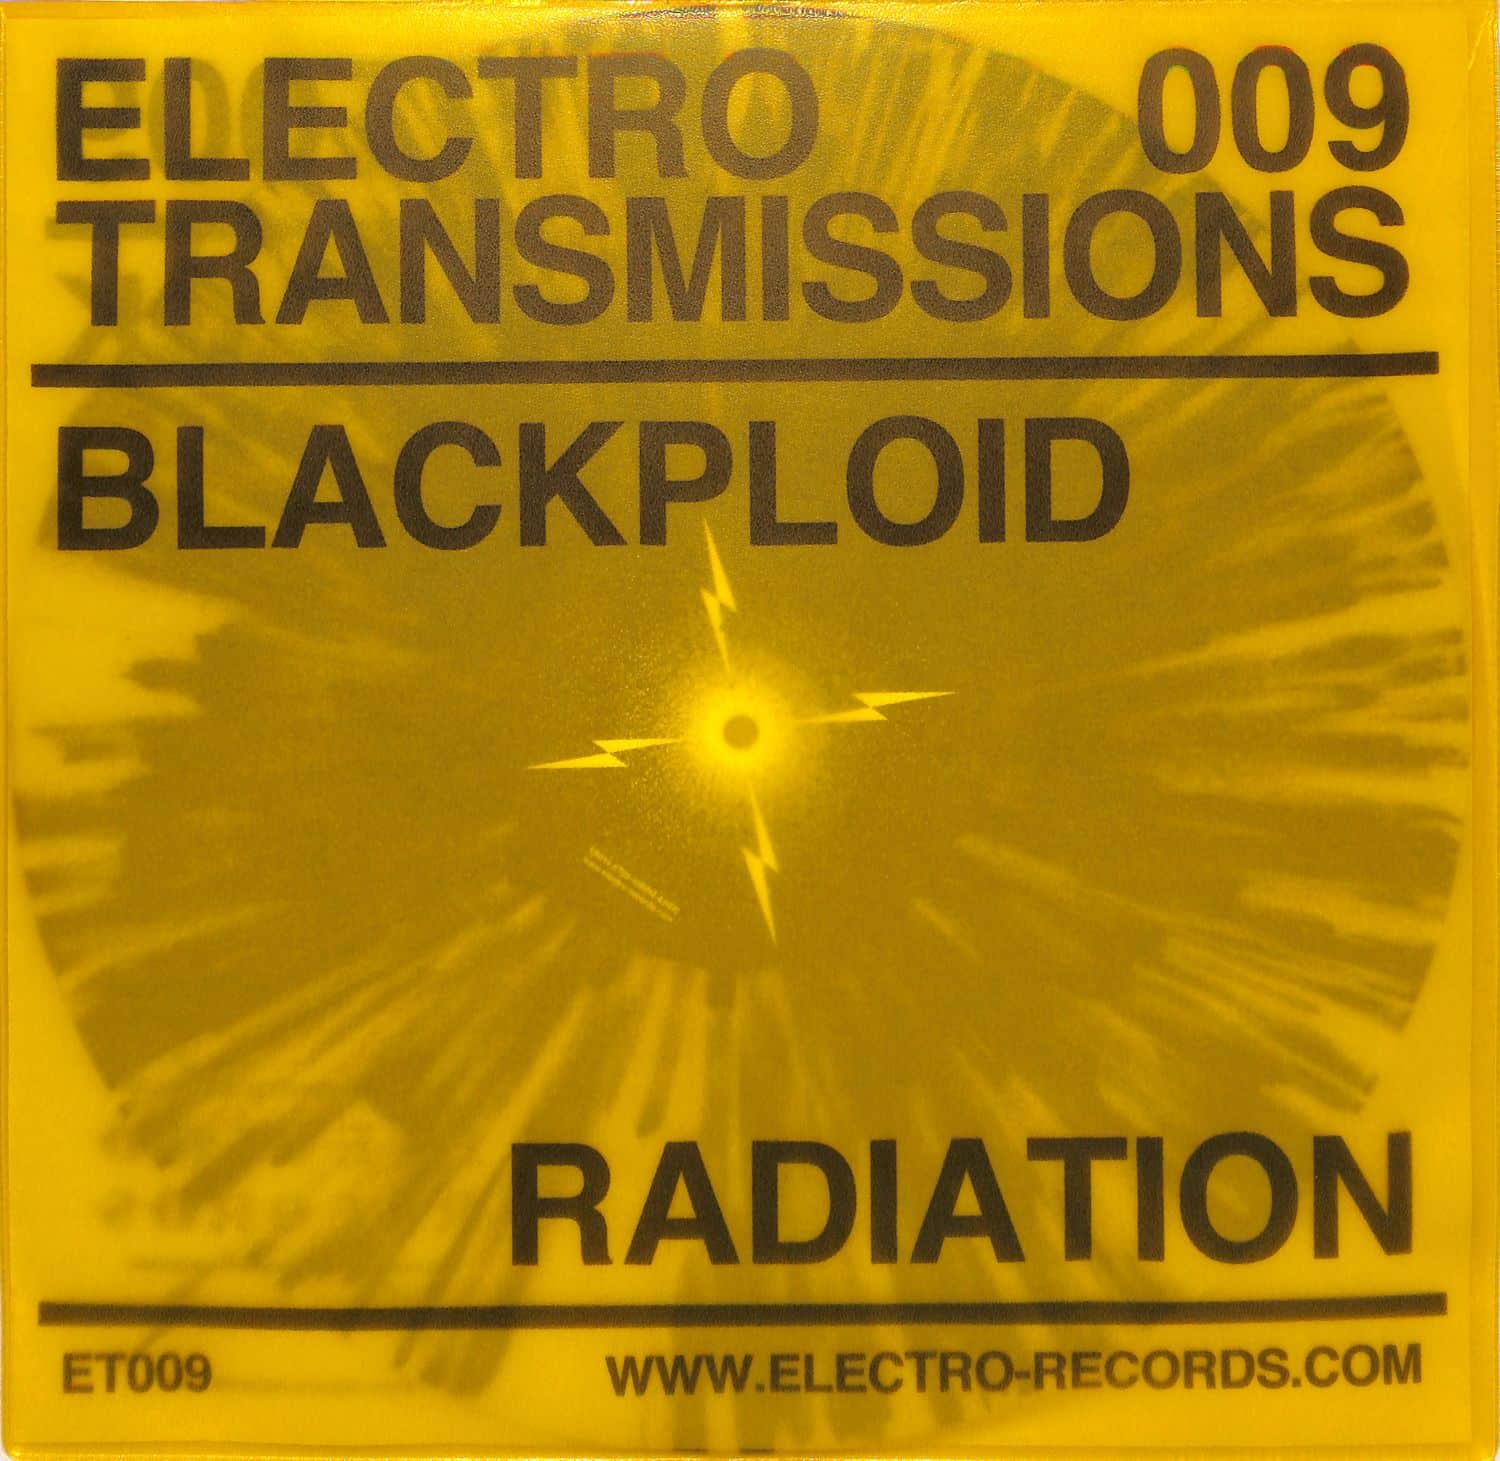 Blackploid - ELECTRO TRANSMISSIONS 009 RADIATION EP